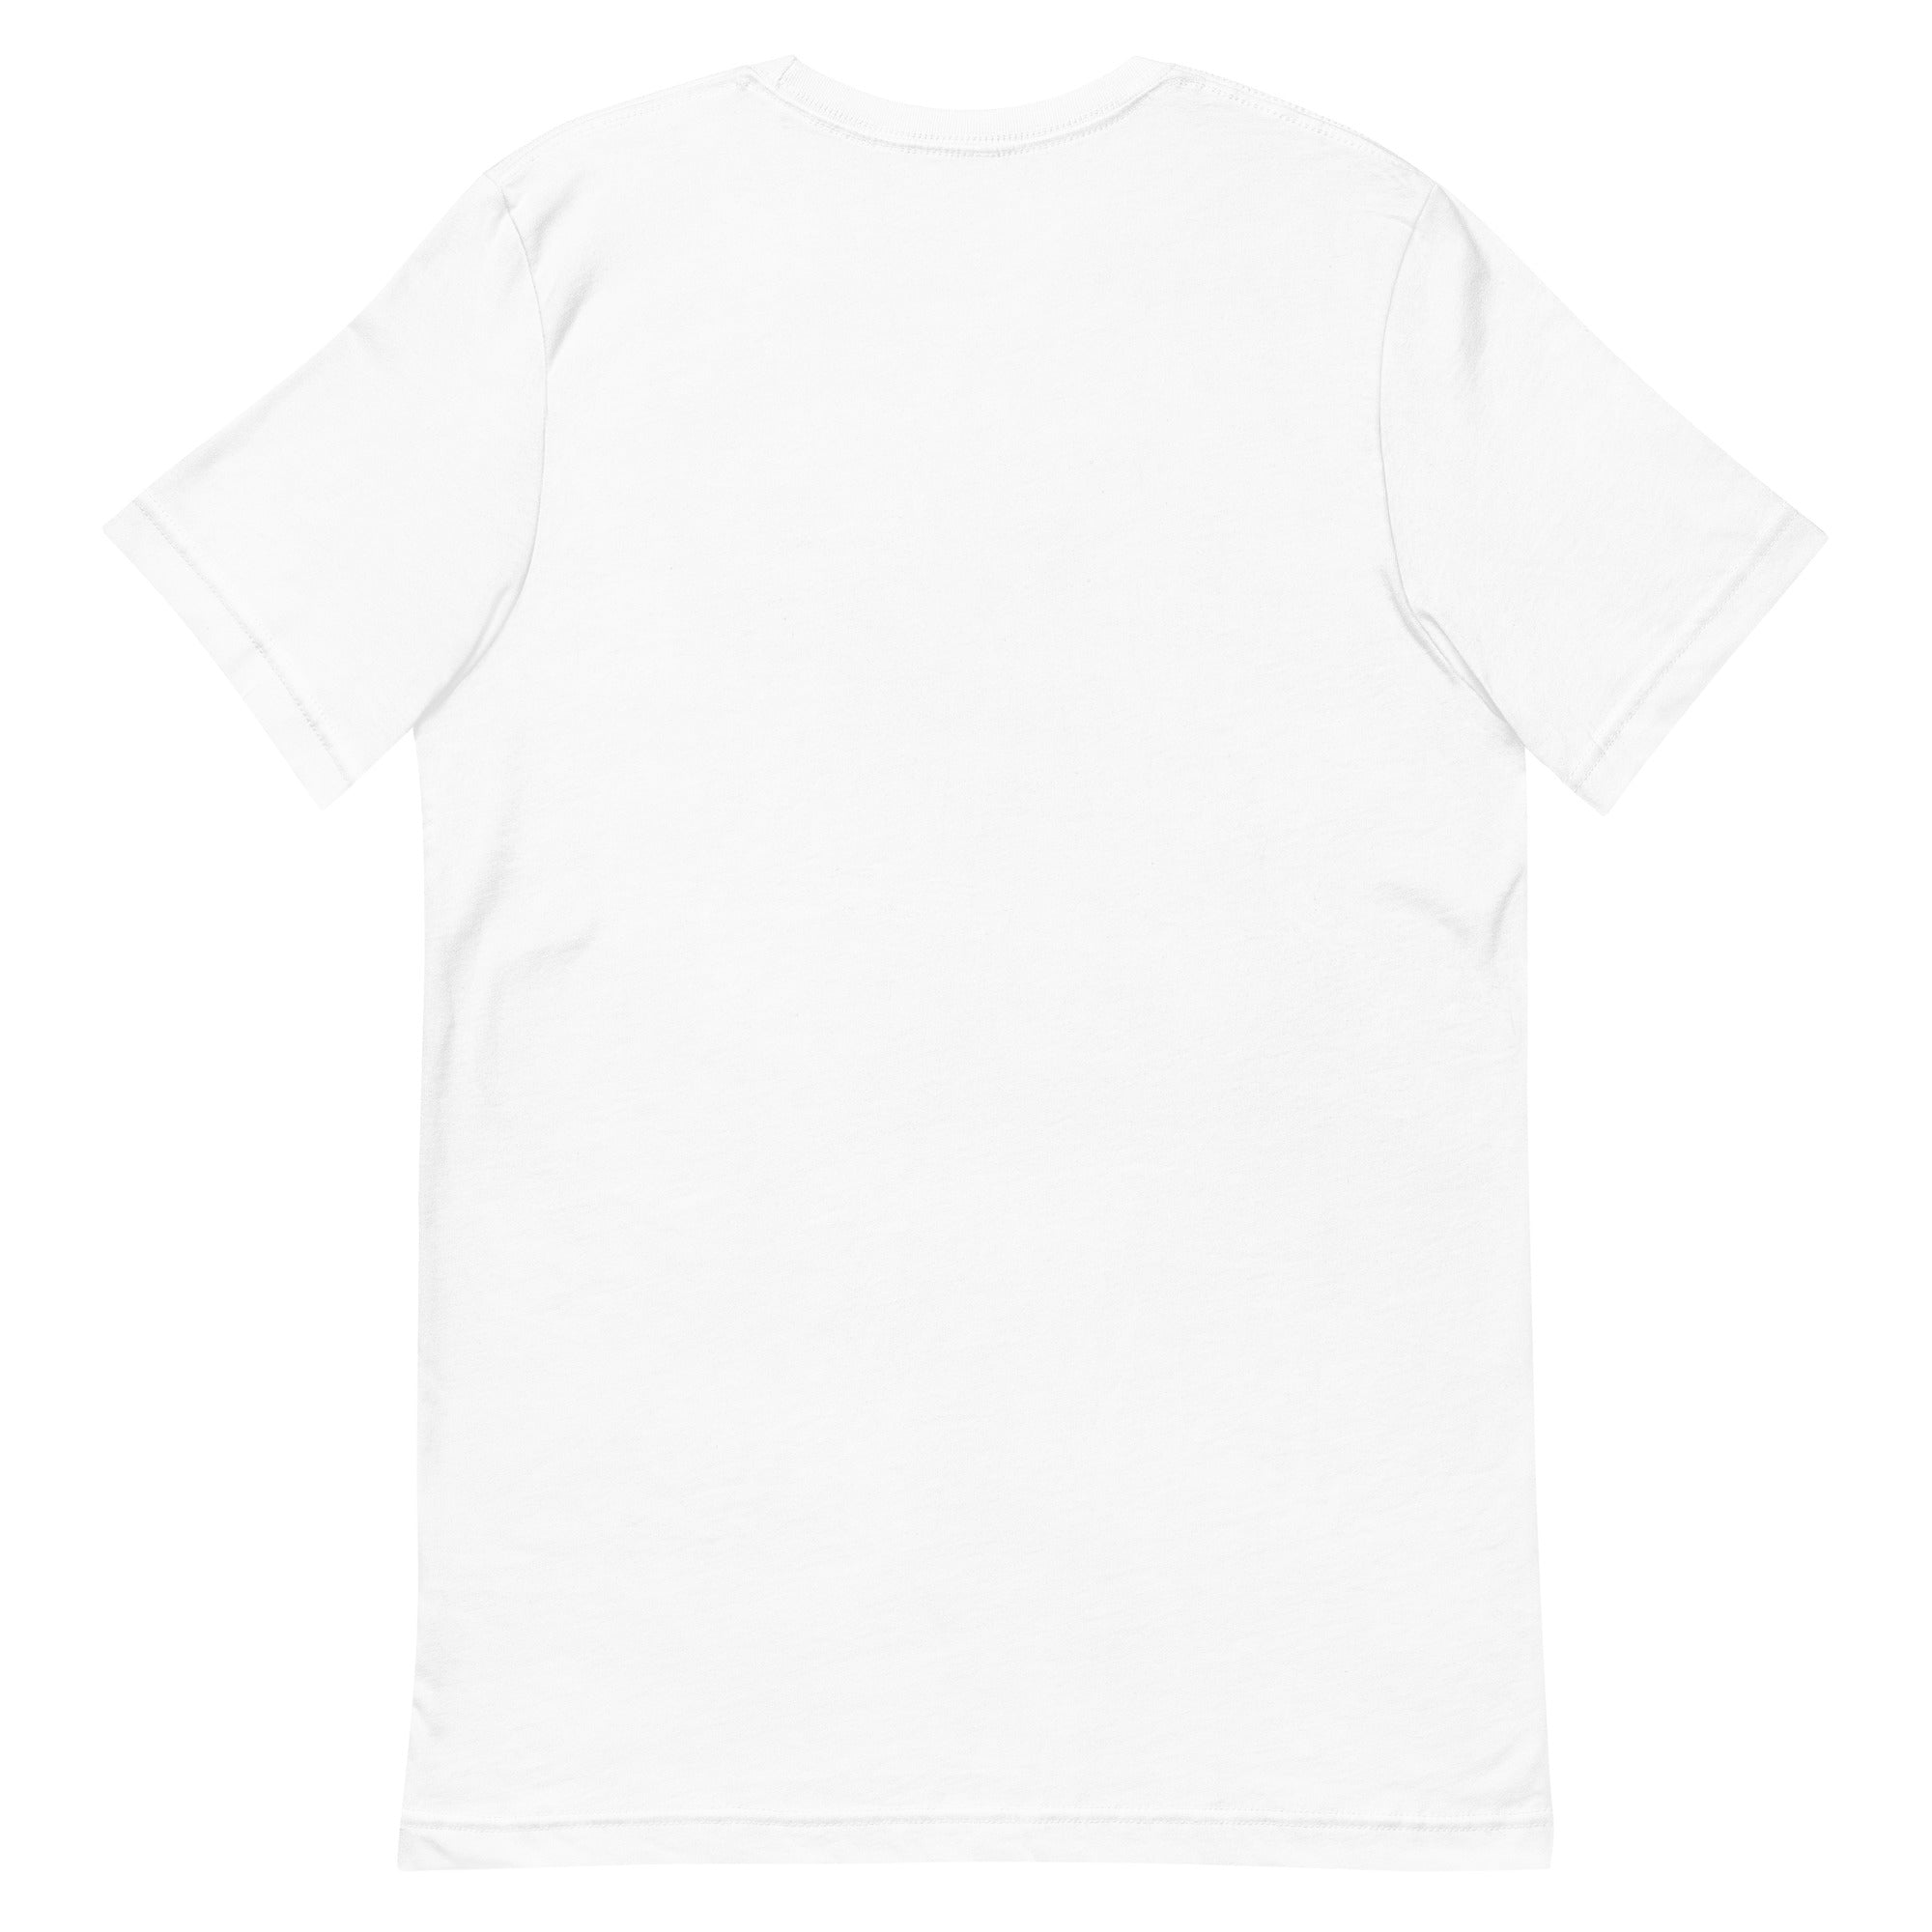 savar-mens-rolls-royce-white-t-shirt-st234-100